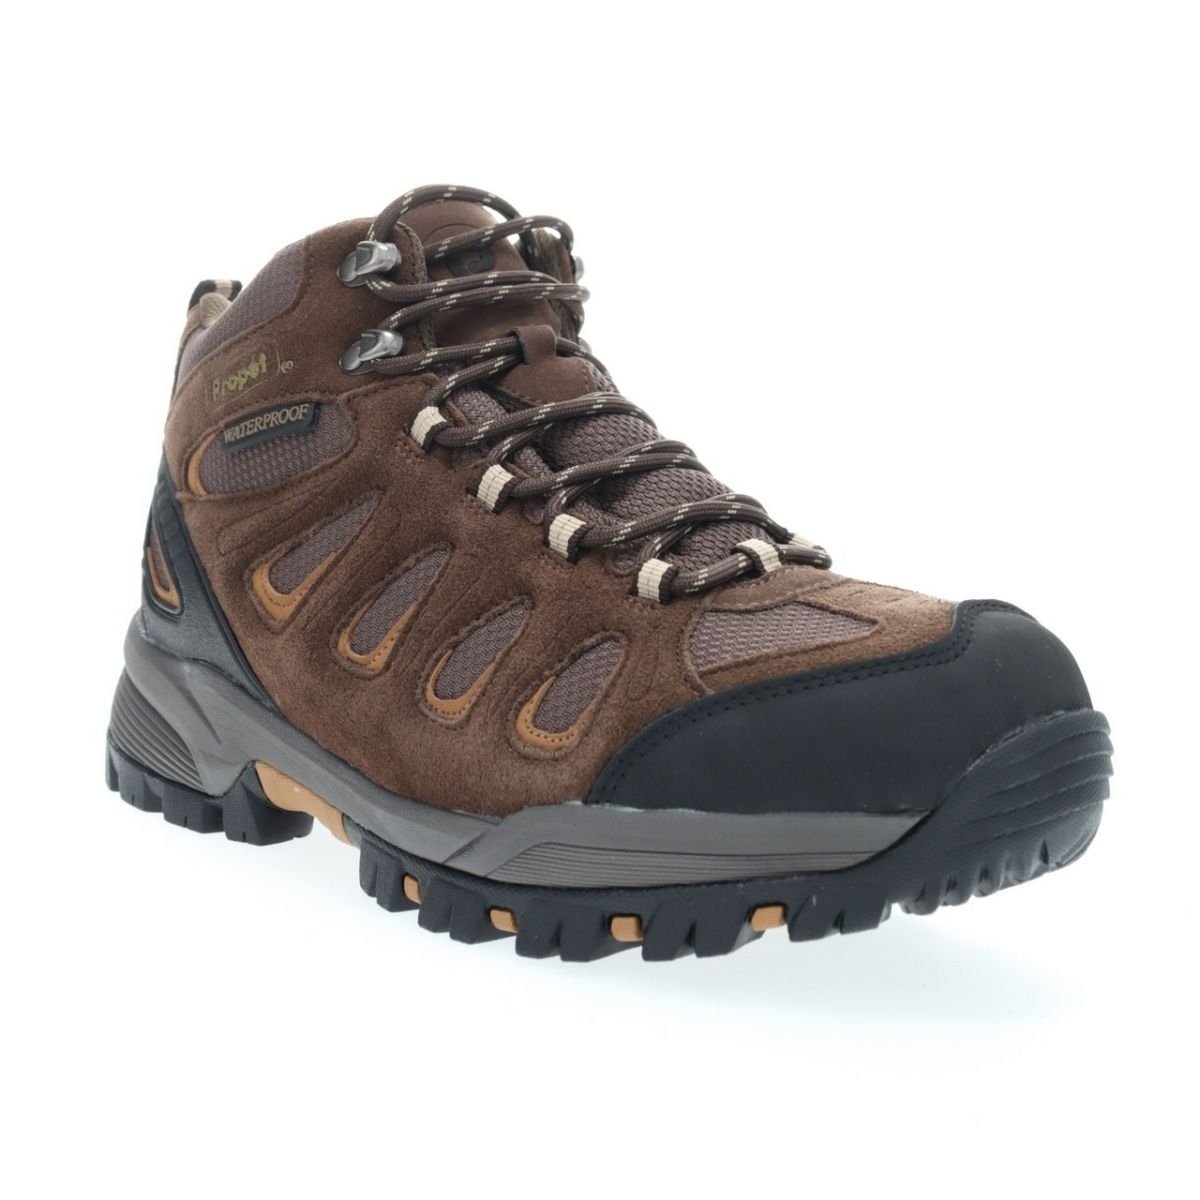 Propet Men's Ridge Walker Hiking Boot Brown - M3599BR 8 XX US Men BROWN - BROWN, 11-E